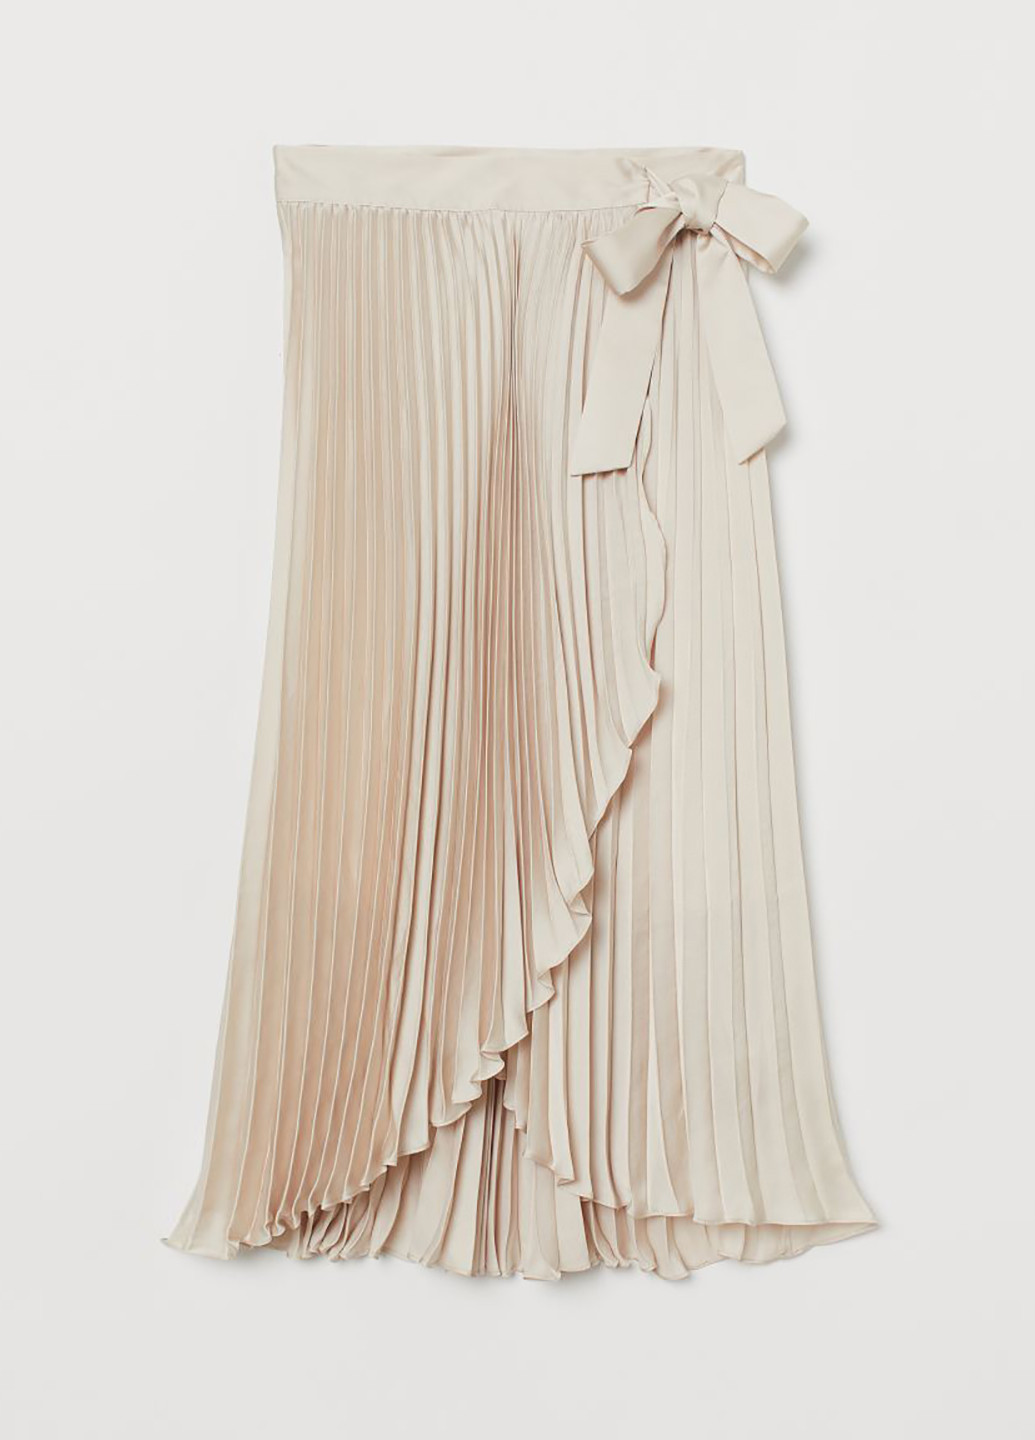 Светло-бежевая кэжуал однотонная юбка H&M клешированная, на запах